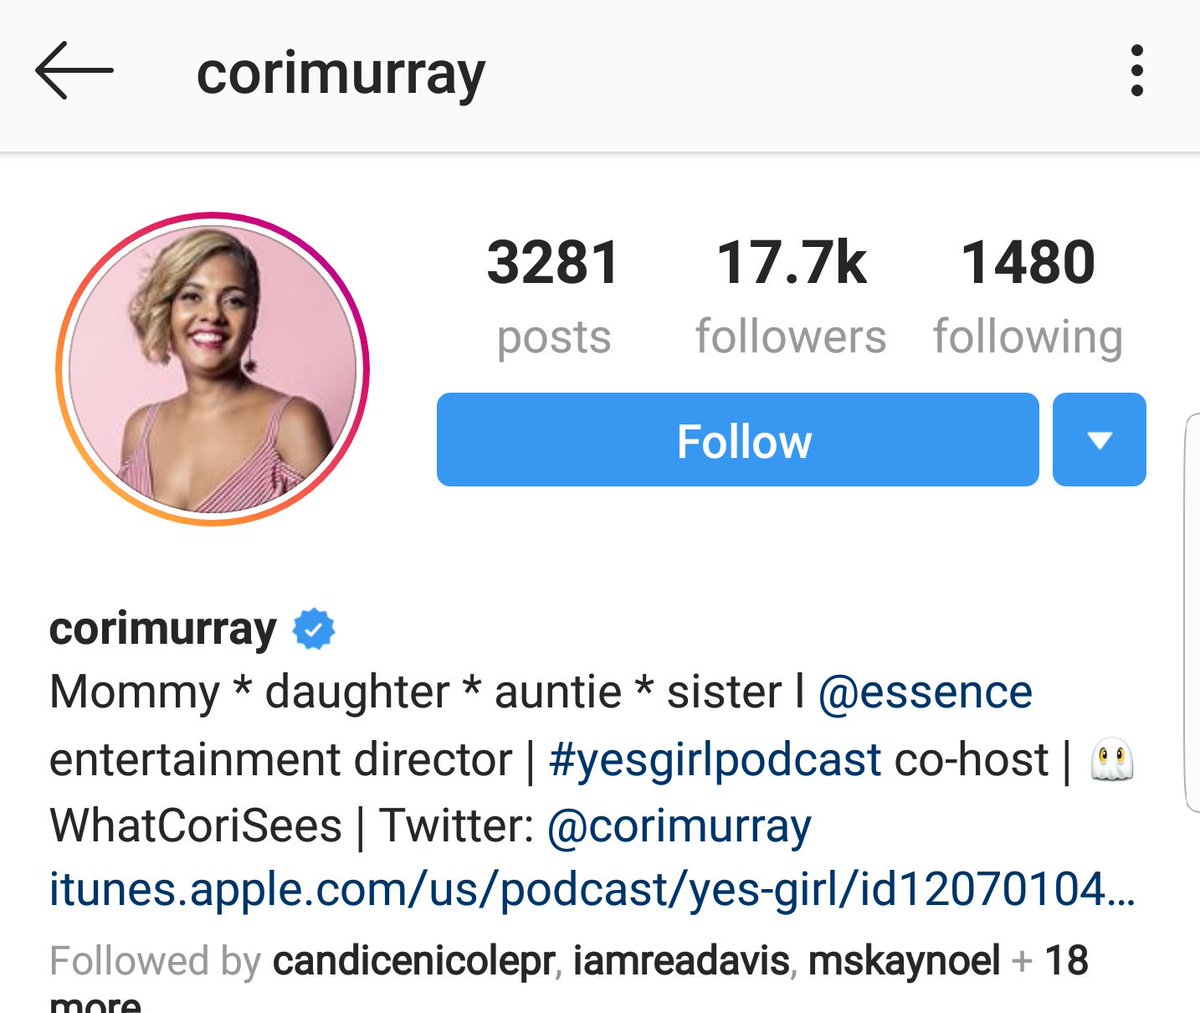 Cori Murray IG: CorimurrayEssence Entertainment DirectorPodcast co-host